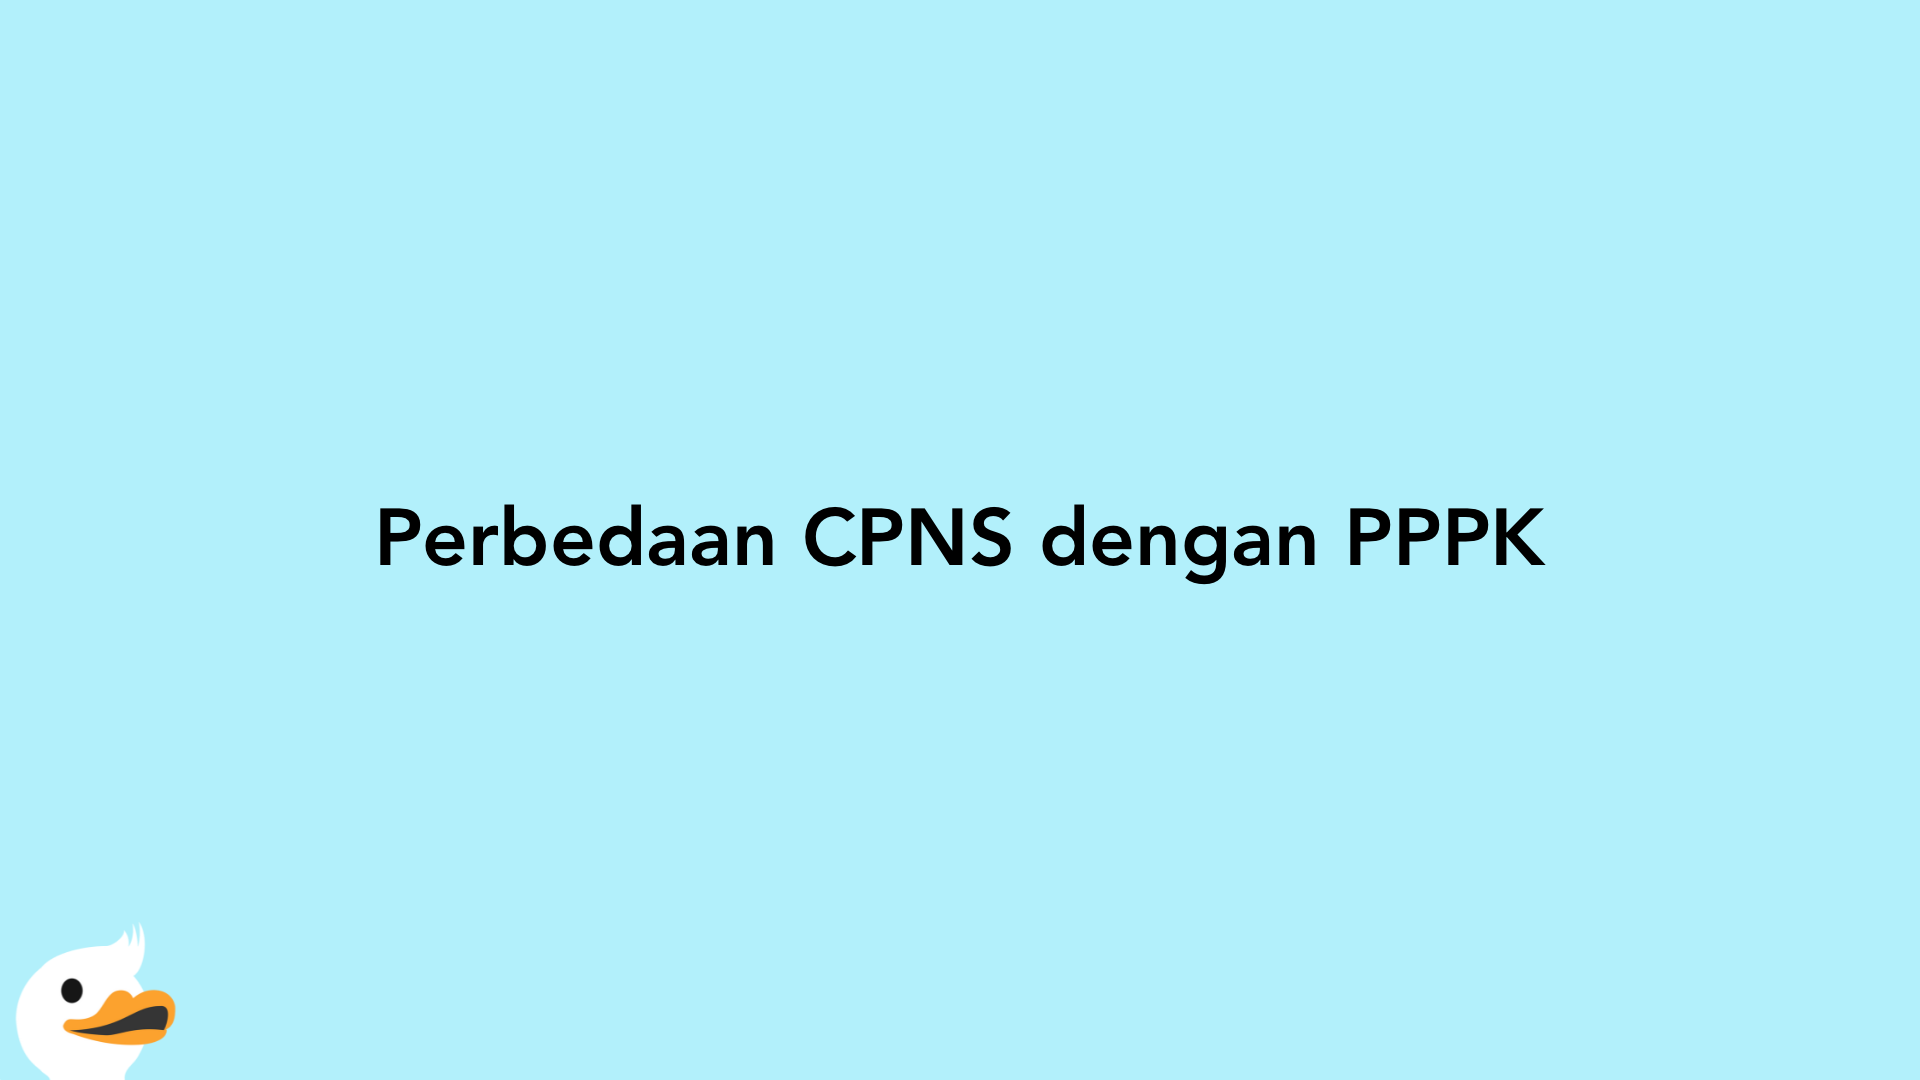 Perbedaan CPNS dengan PPPK